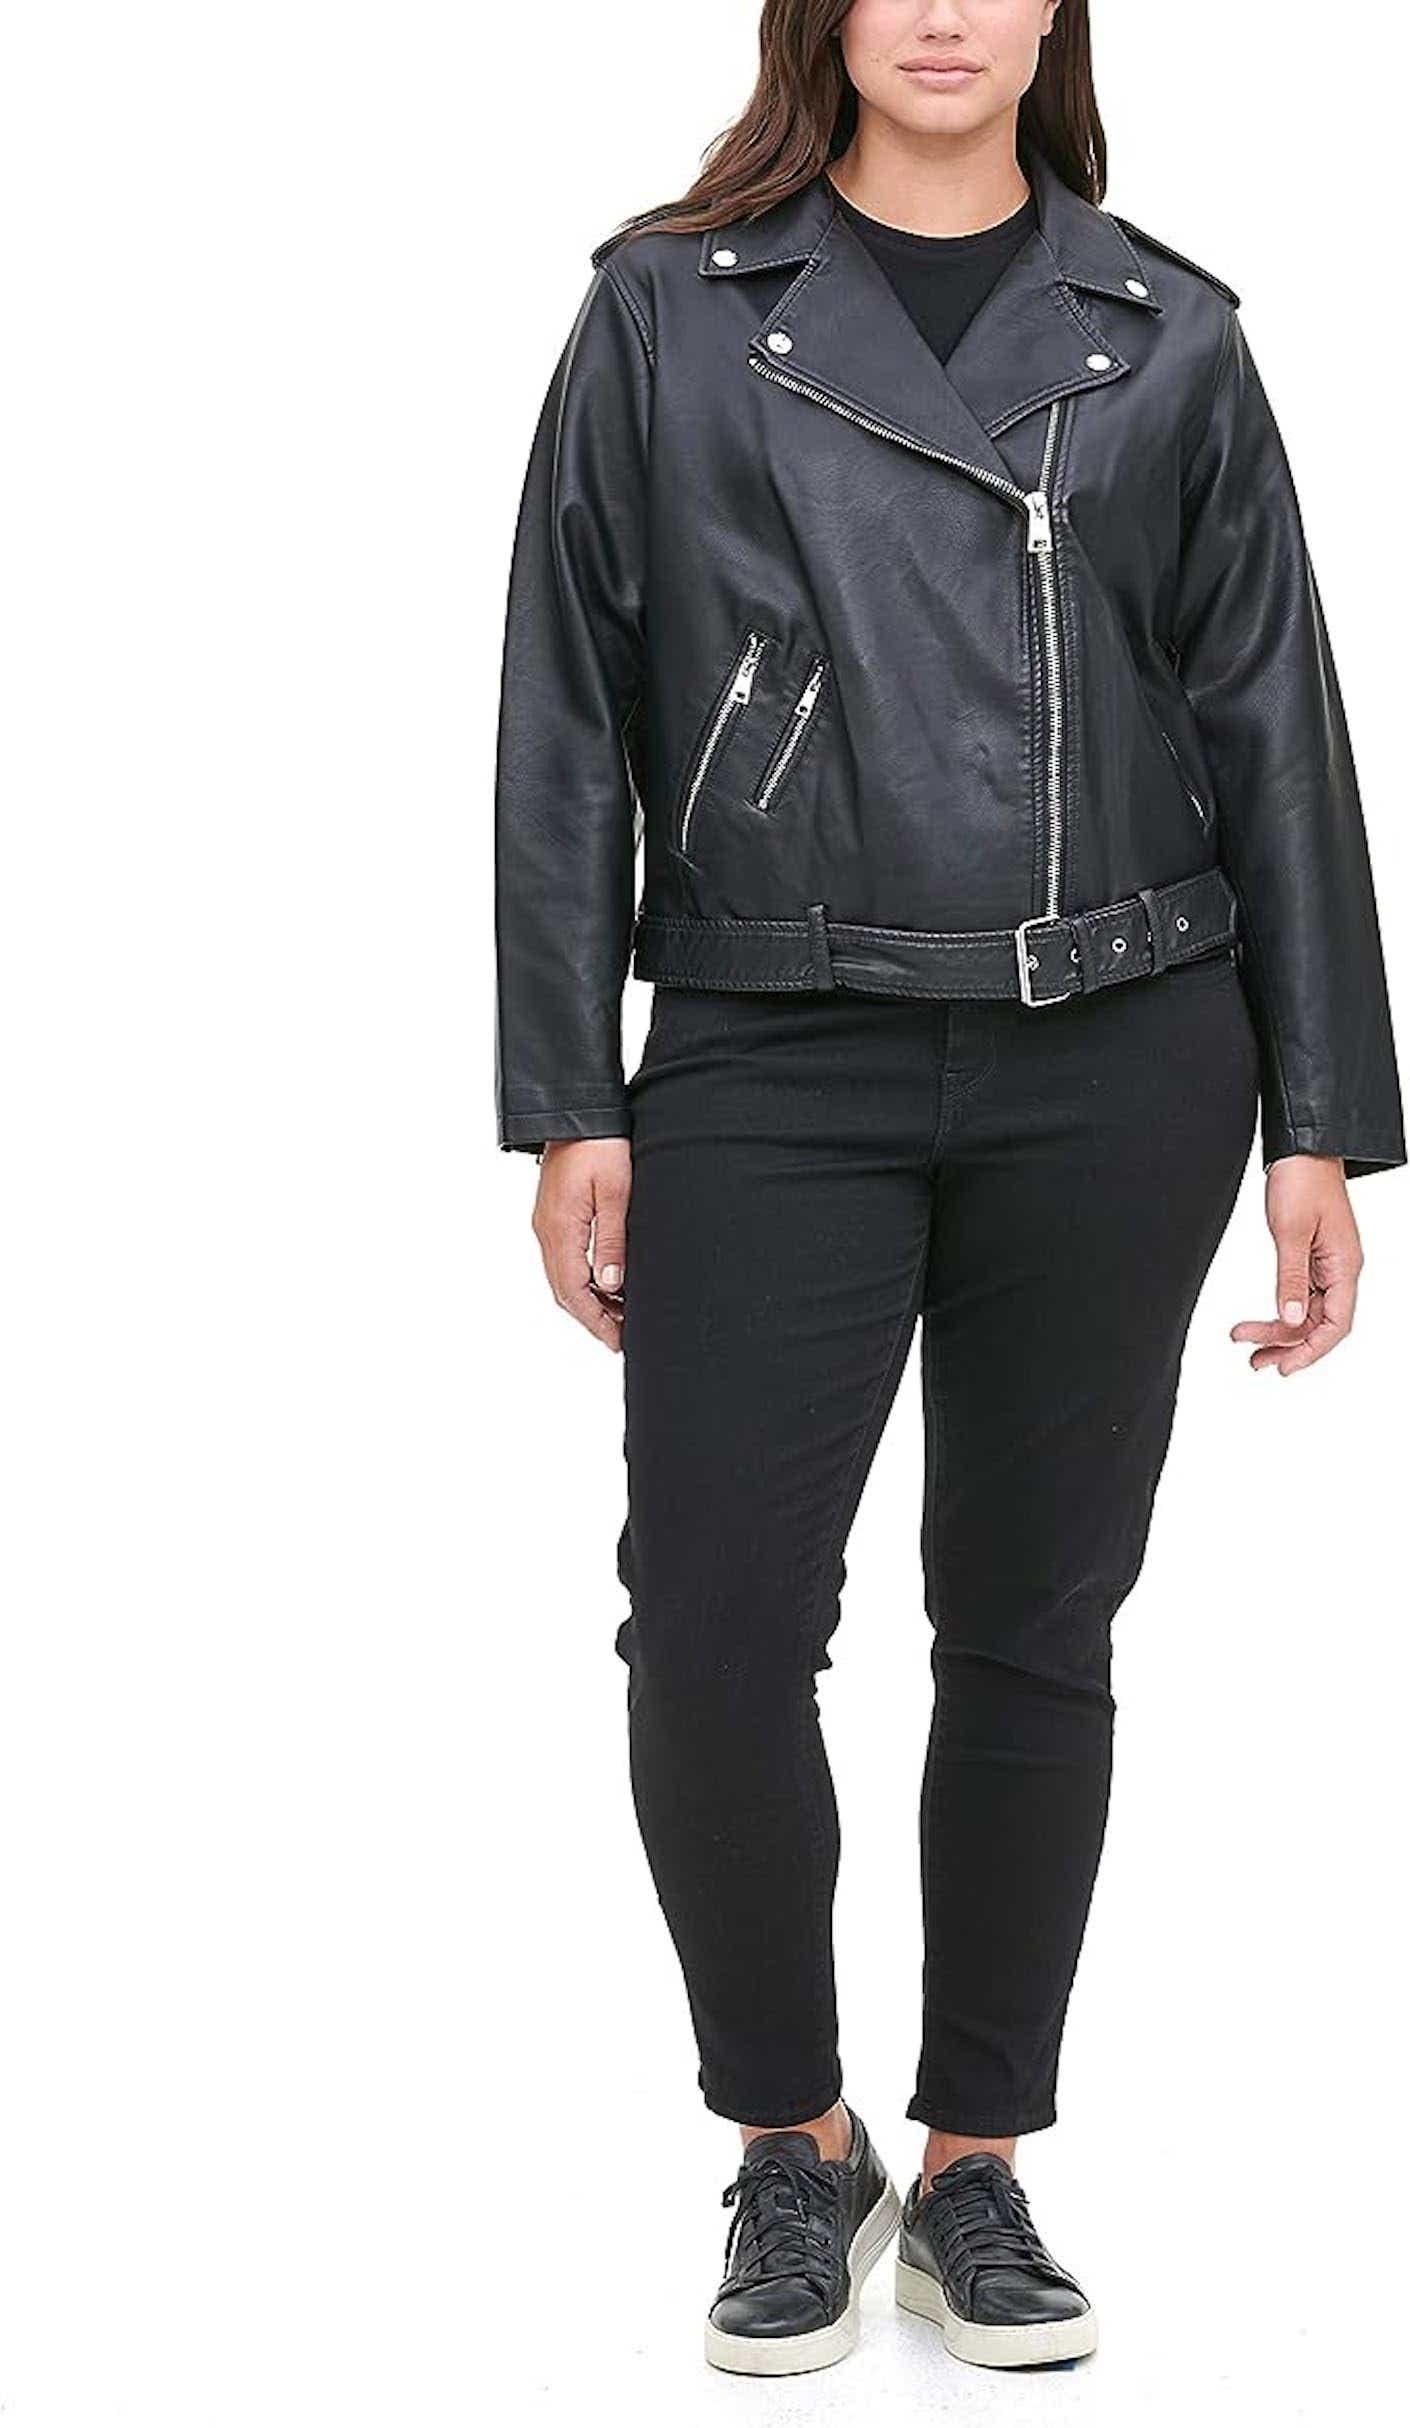 A leather moto jacket